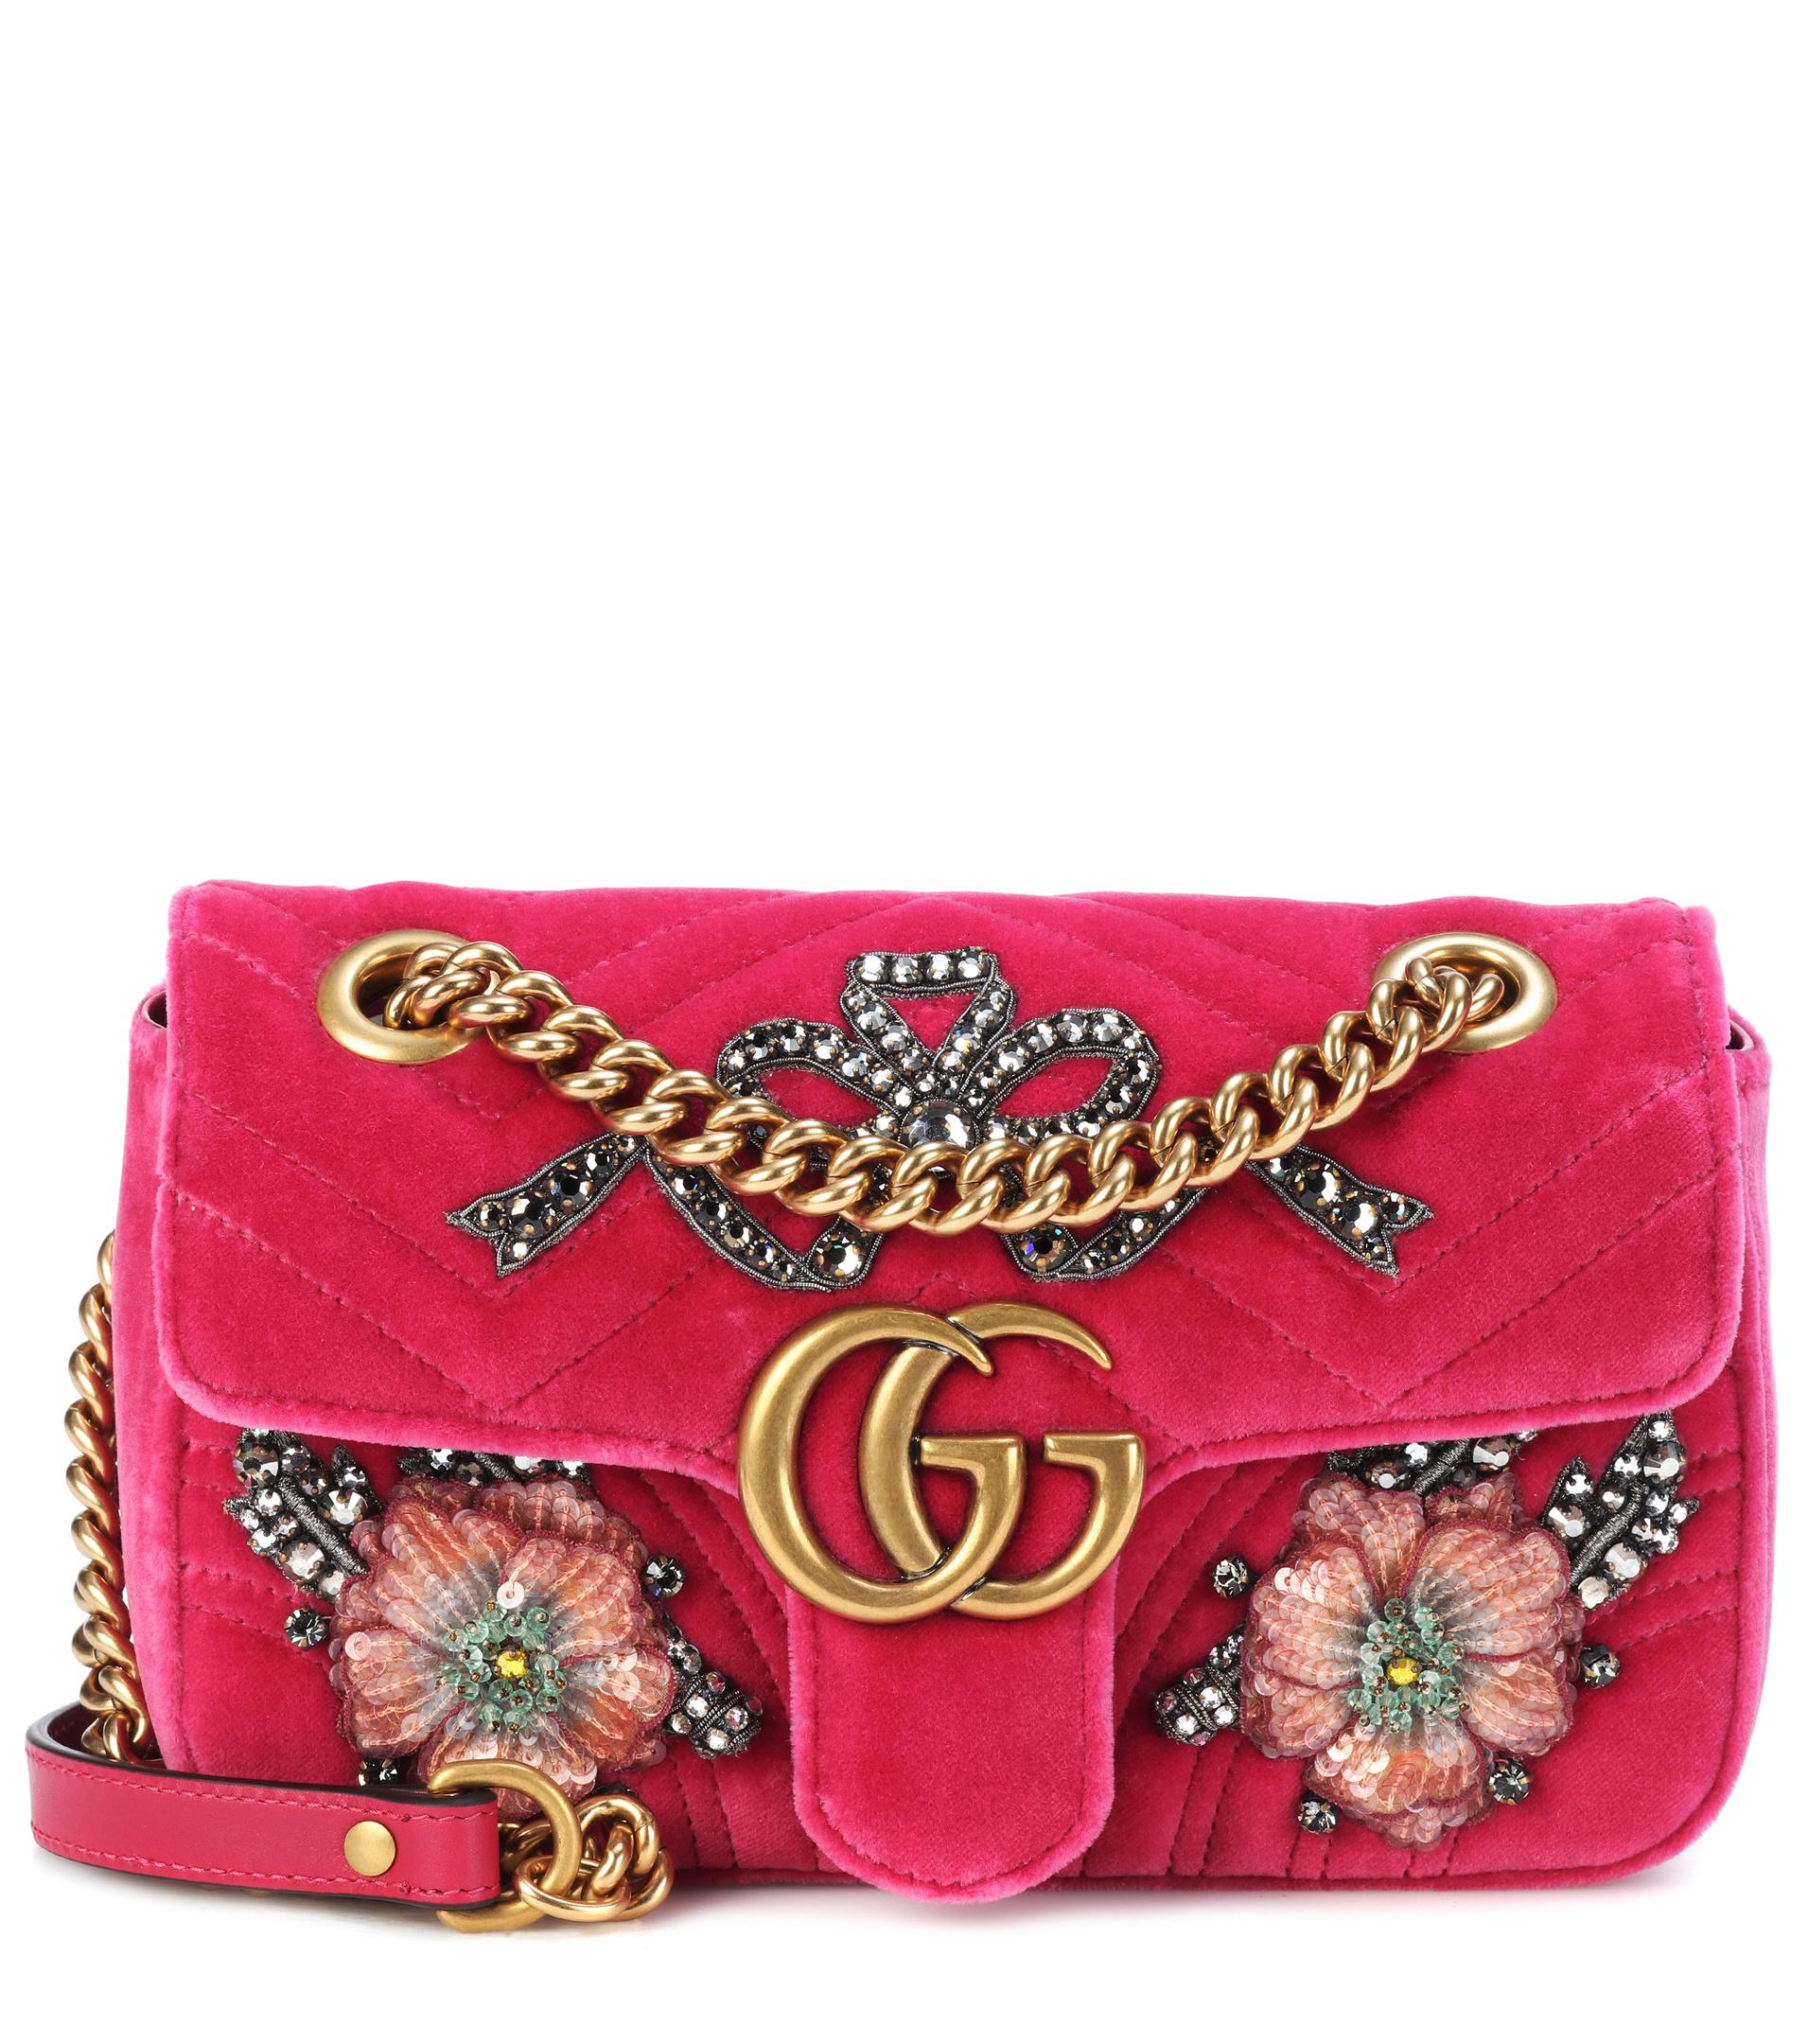 Gucci Gg Marmont Mini Velvet Shoulder Bag in Red - Lyst